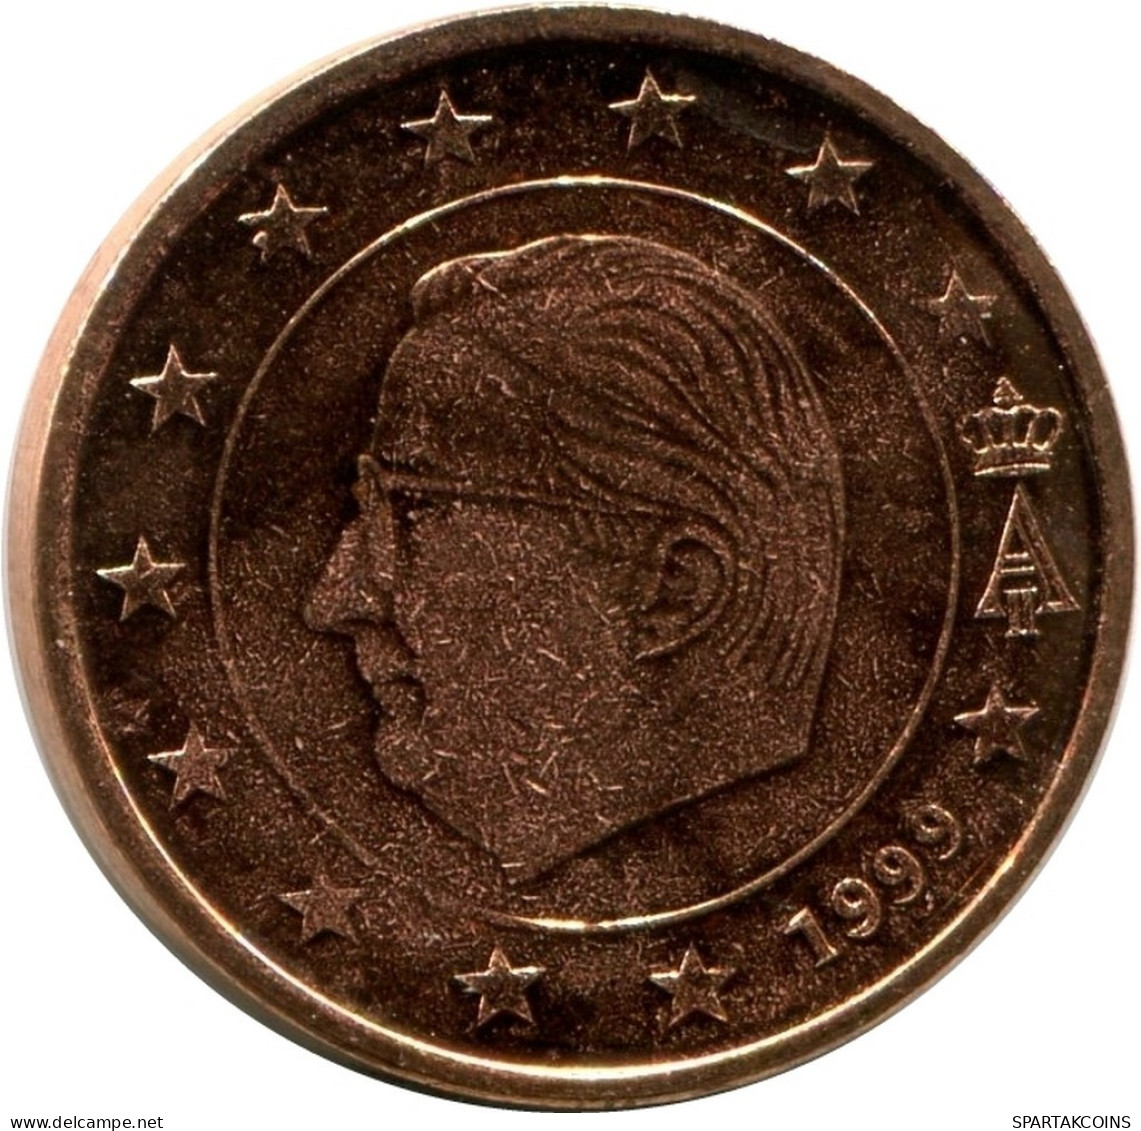 5 EURO CENT 1999 BELGIUM Coin UNC #M10260.U.A - België